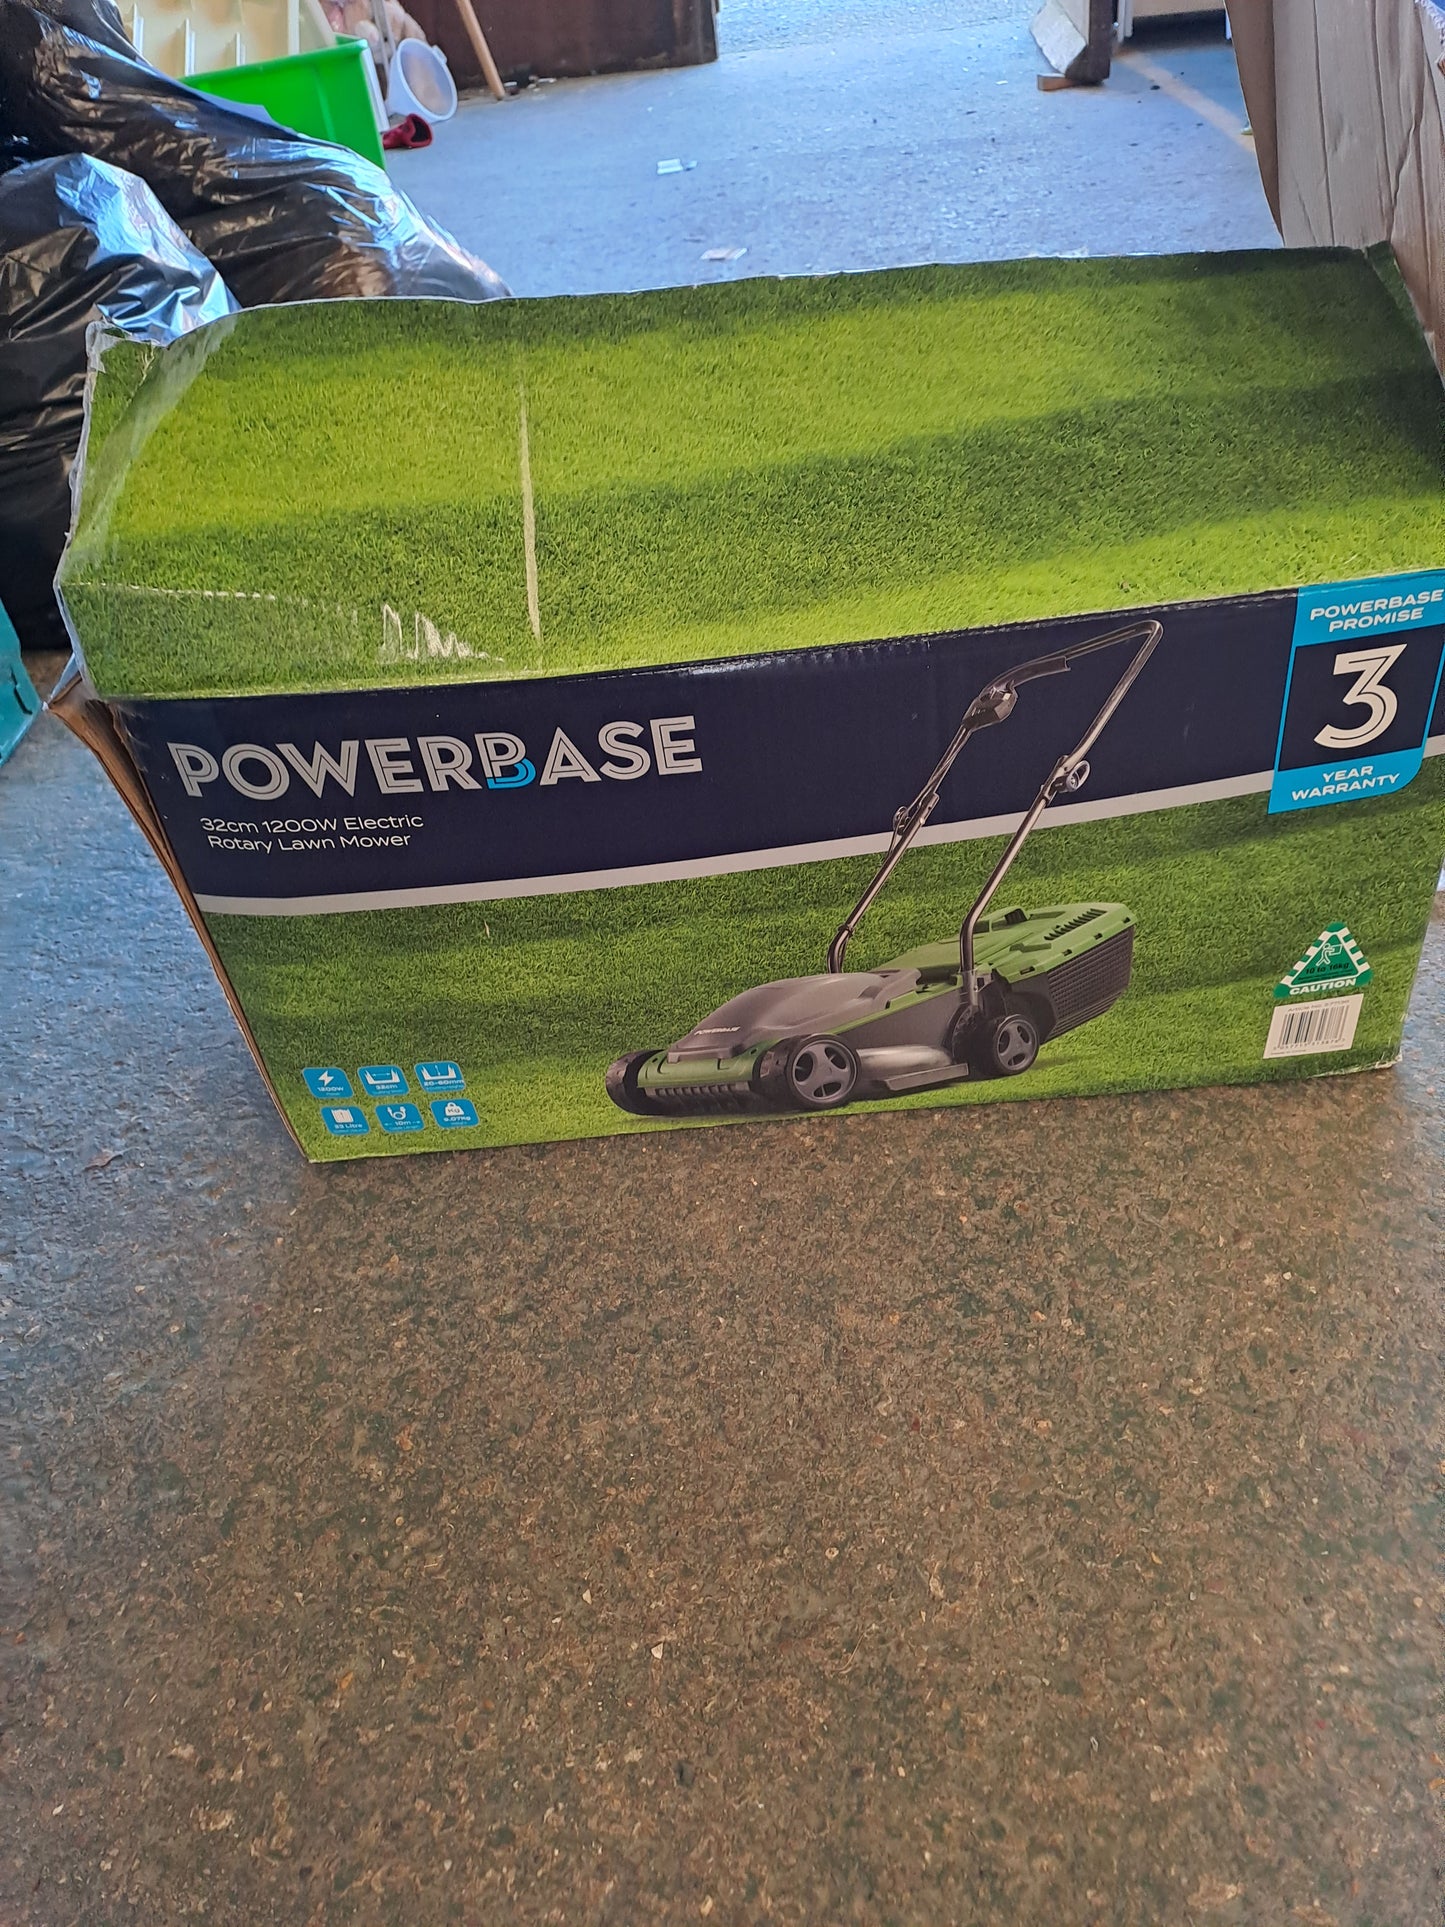 Powerbase 32cm 1200w Electric Rotary Lawn Mower